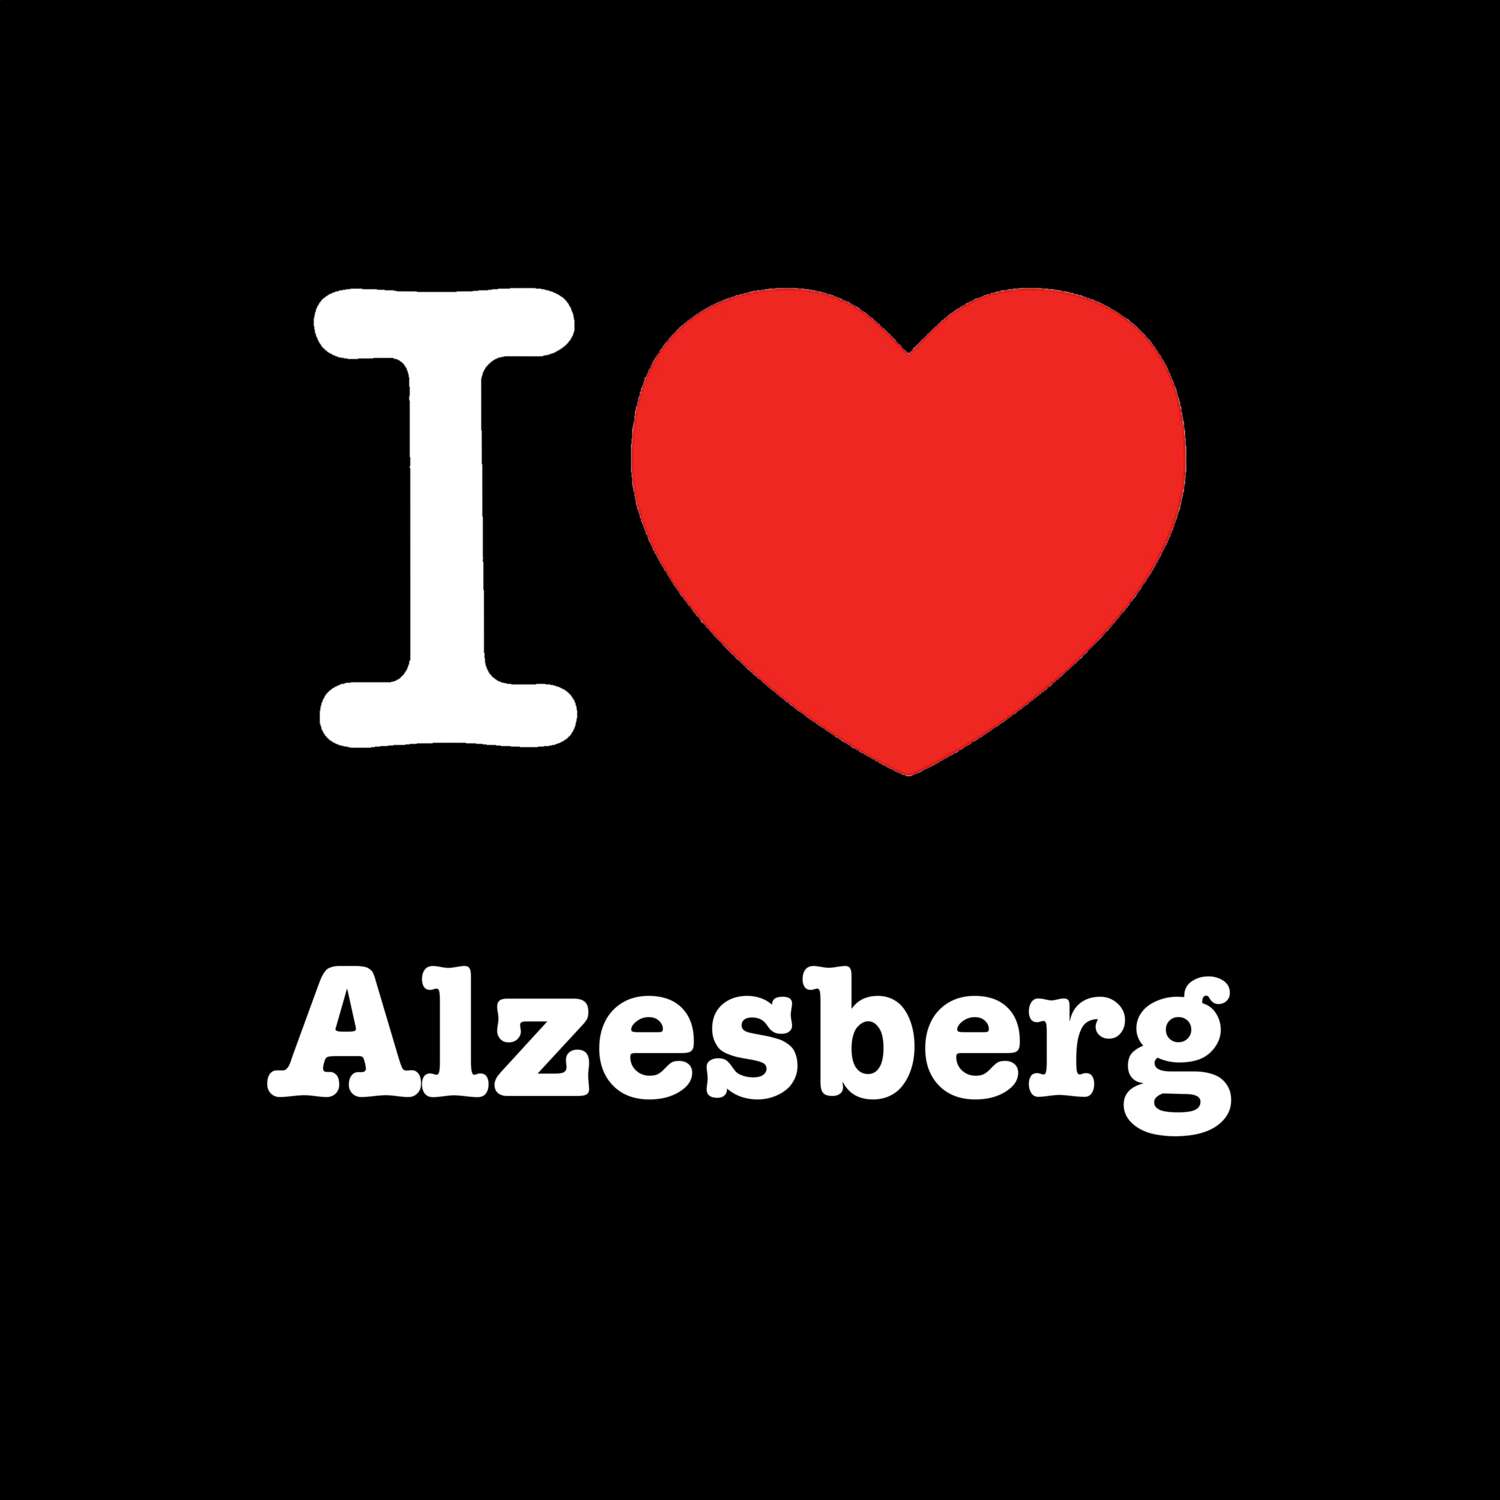 Alzesberg T-Shirt »I love«